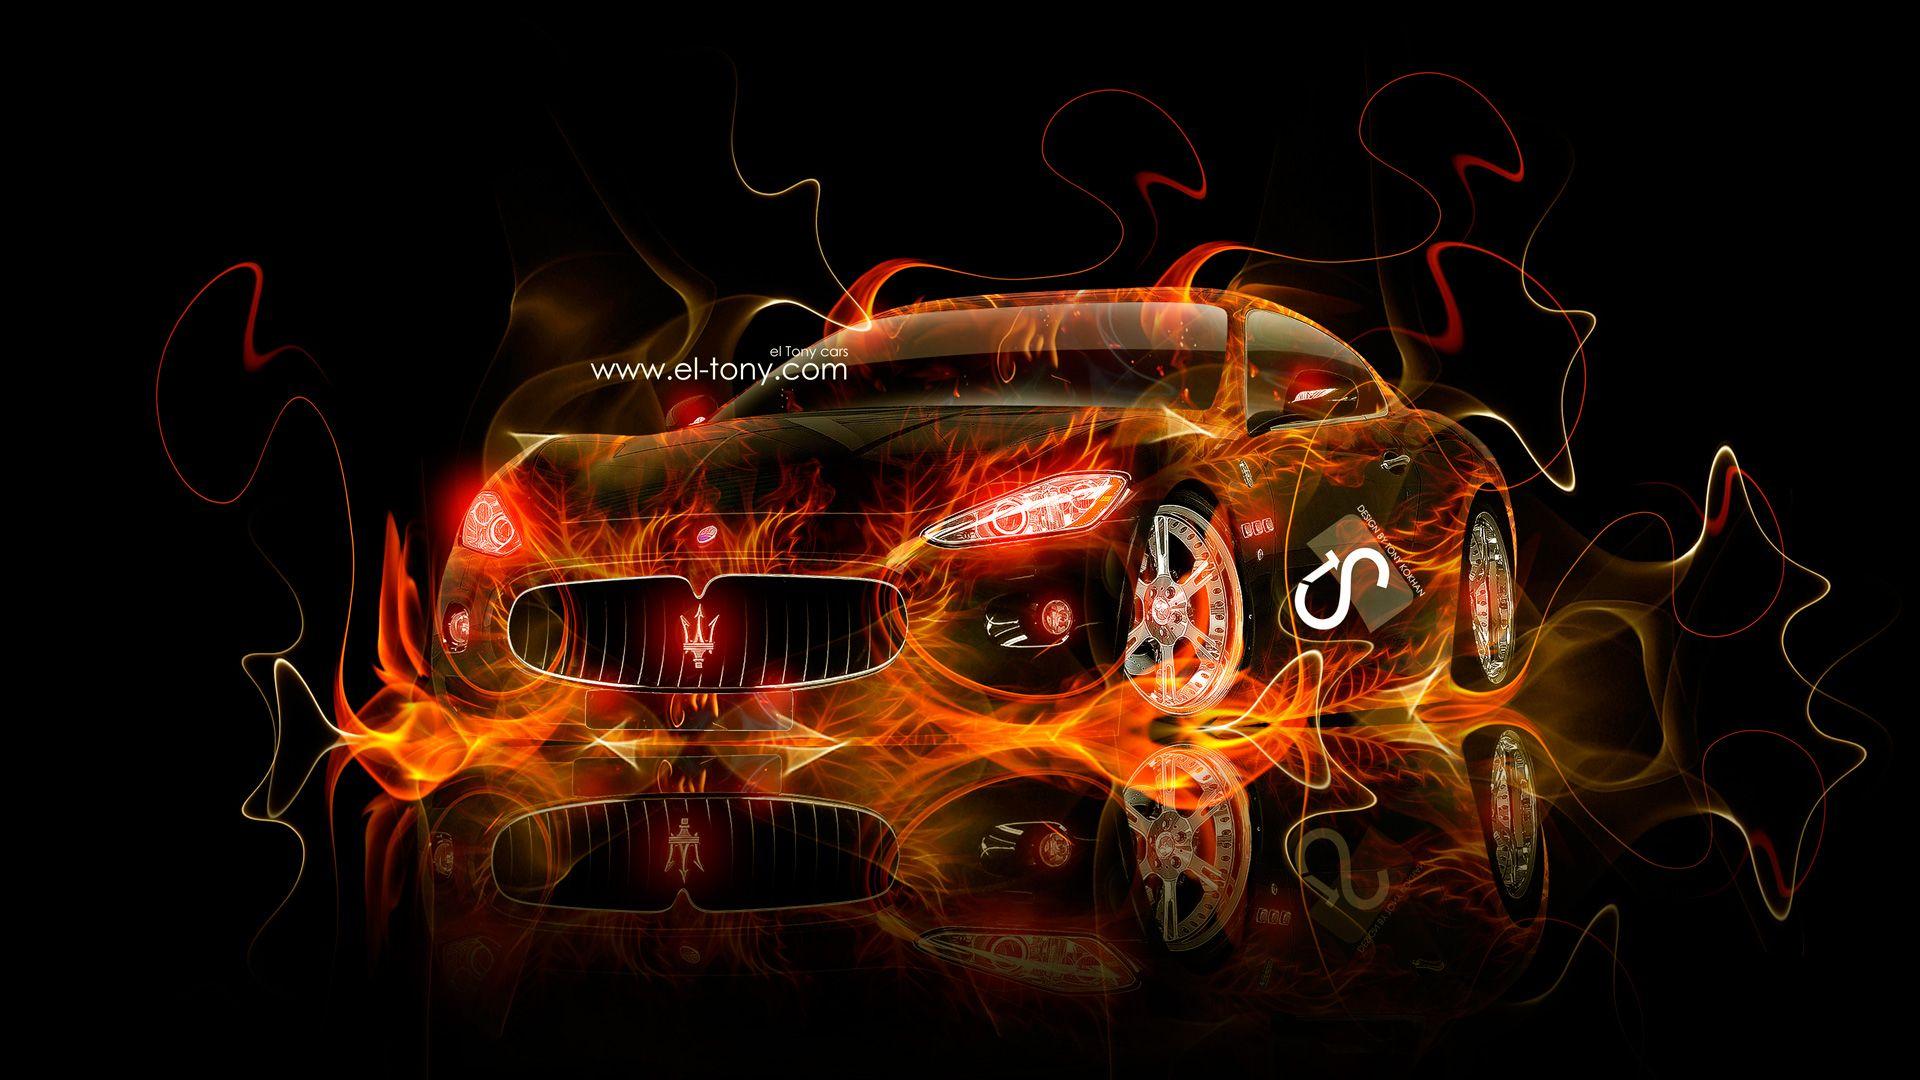 Creative & Graphics Car in Fire City HQ wallpaper Desktop, Phone